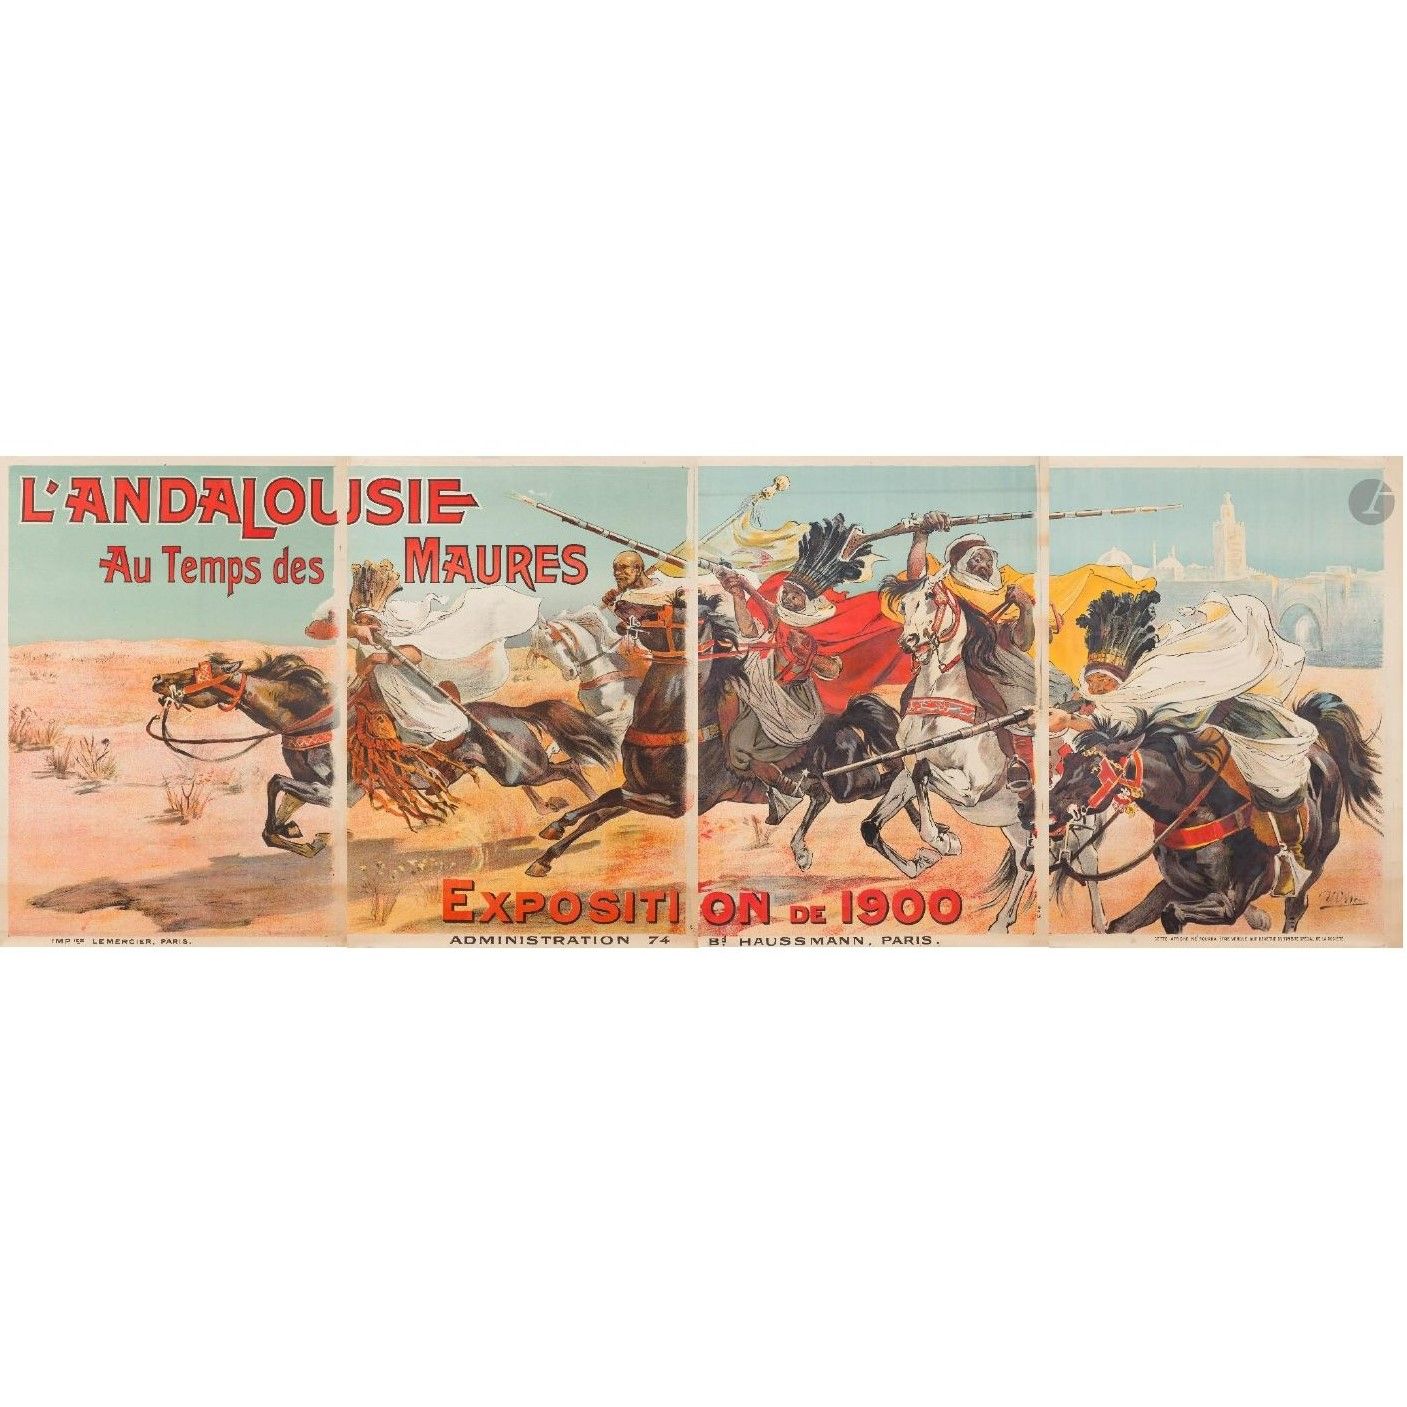 Null Ulpiano CHECA Y SANZ (1860-1916
)摩尔人时期的安达卢西亚，1900年的展览铬版画
，

共4张

。

没有得到支持。&hellip;